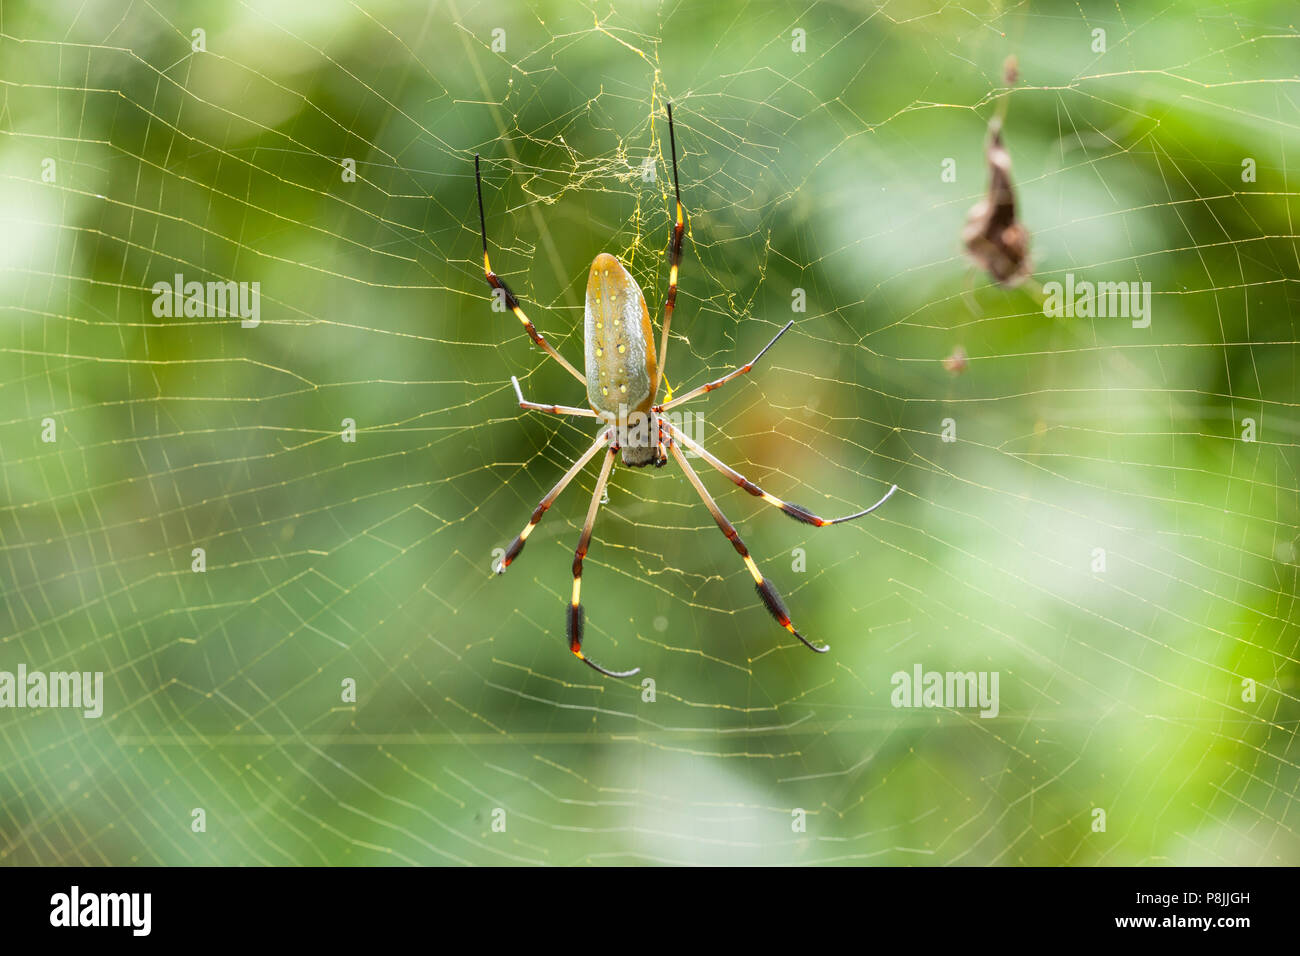 Banana Spider (Nephila clavipes) in web Stock Photo